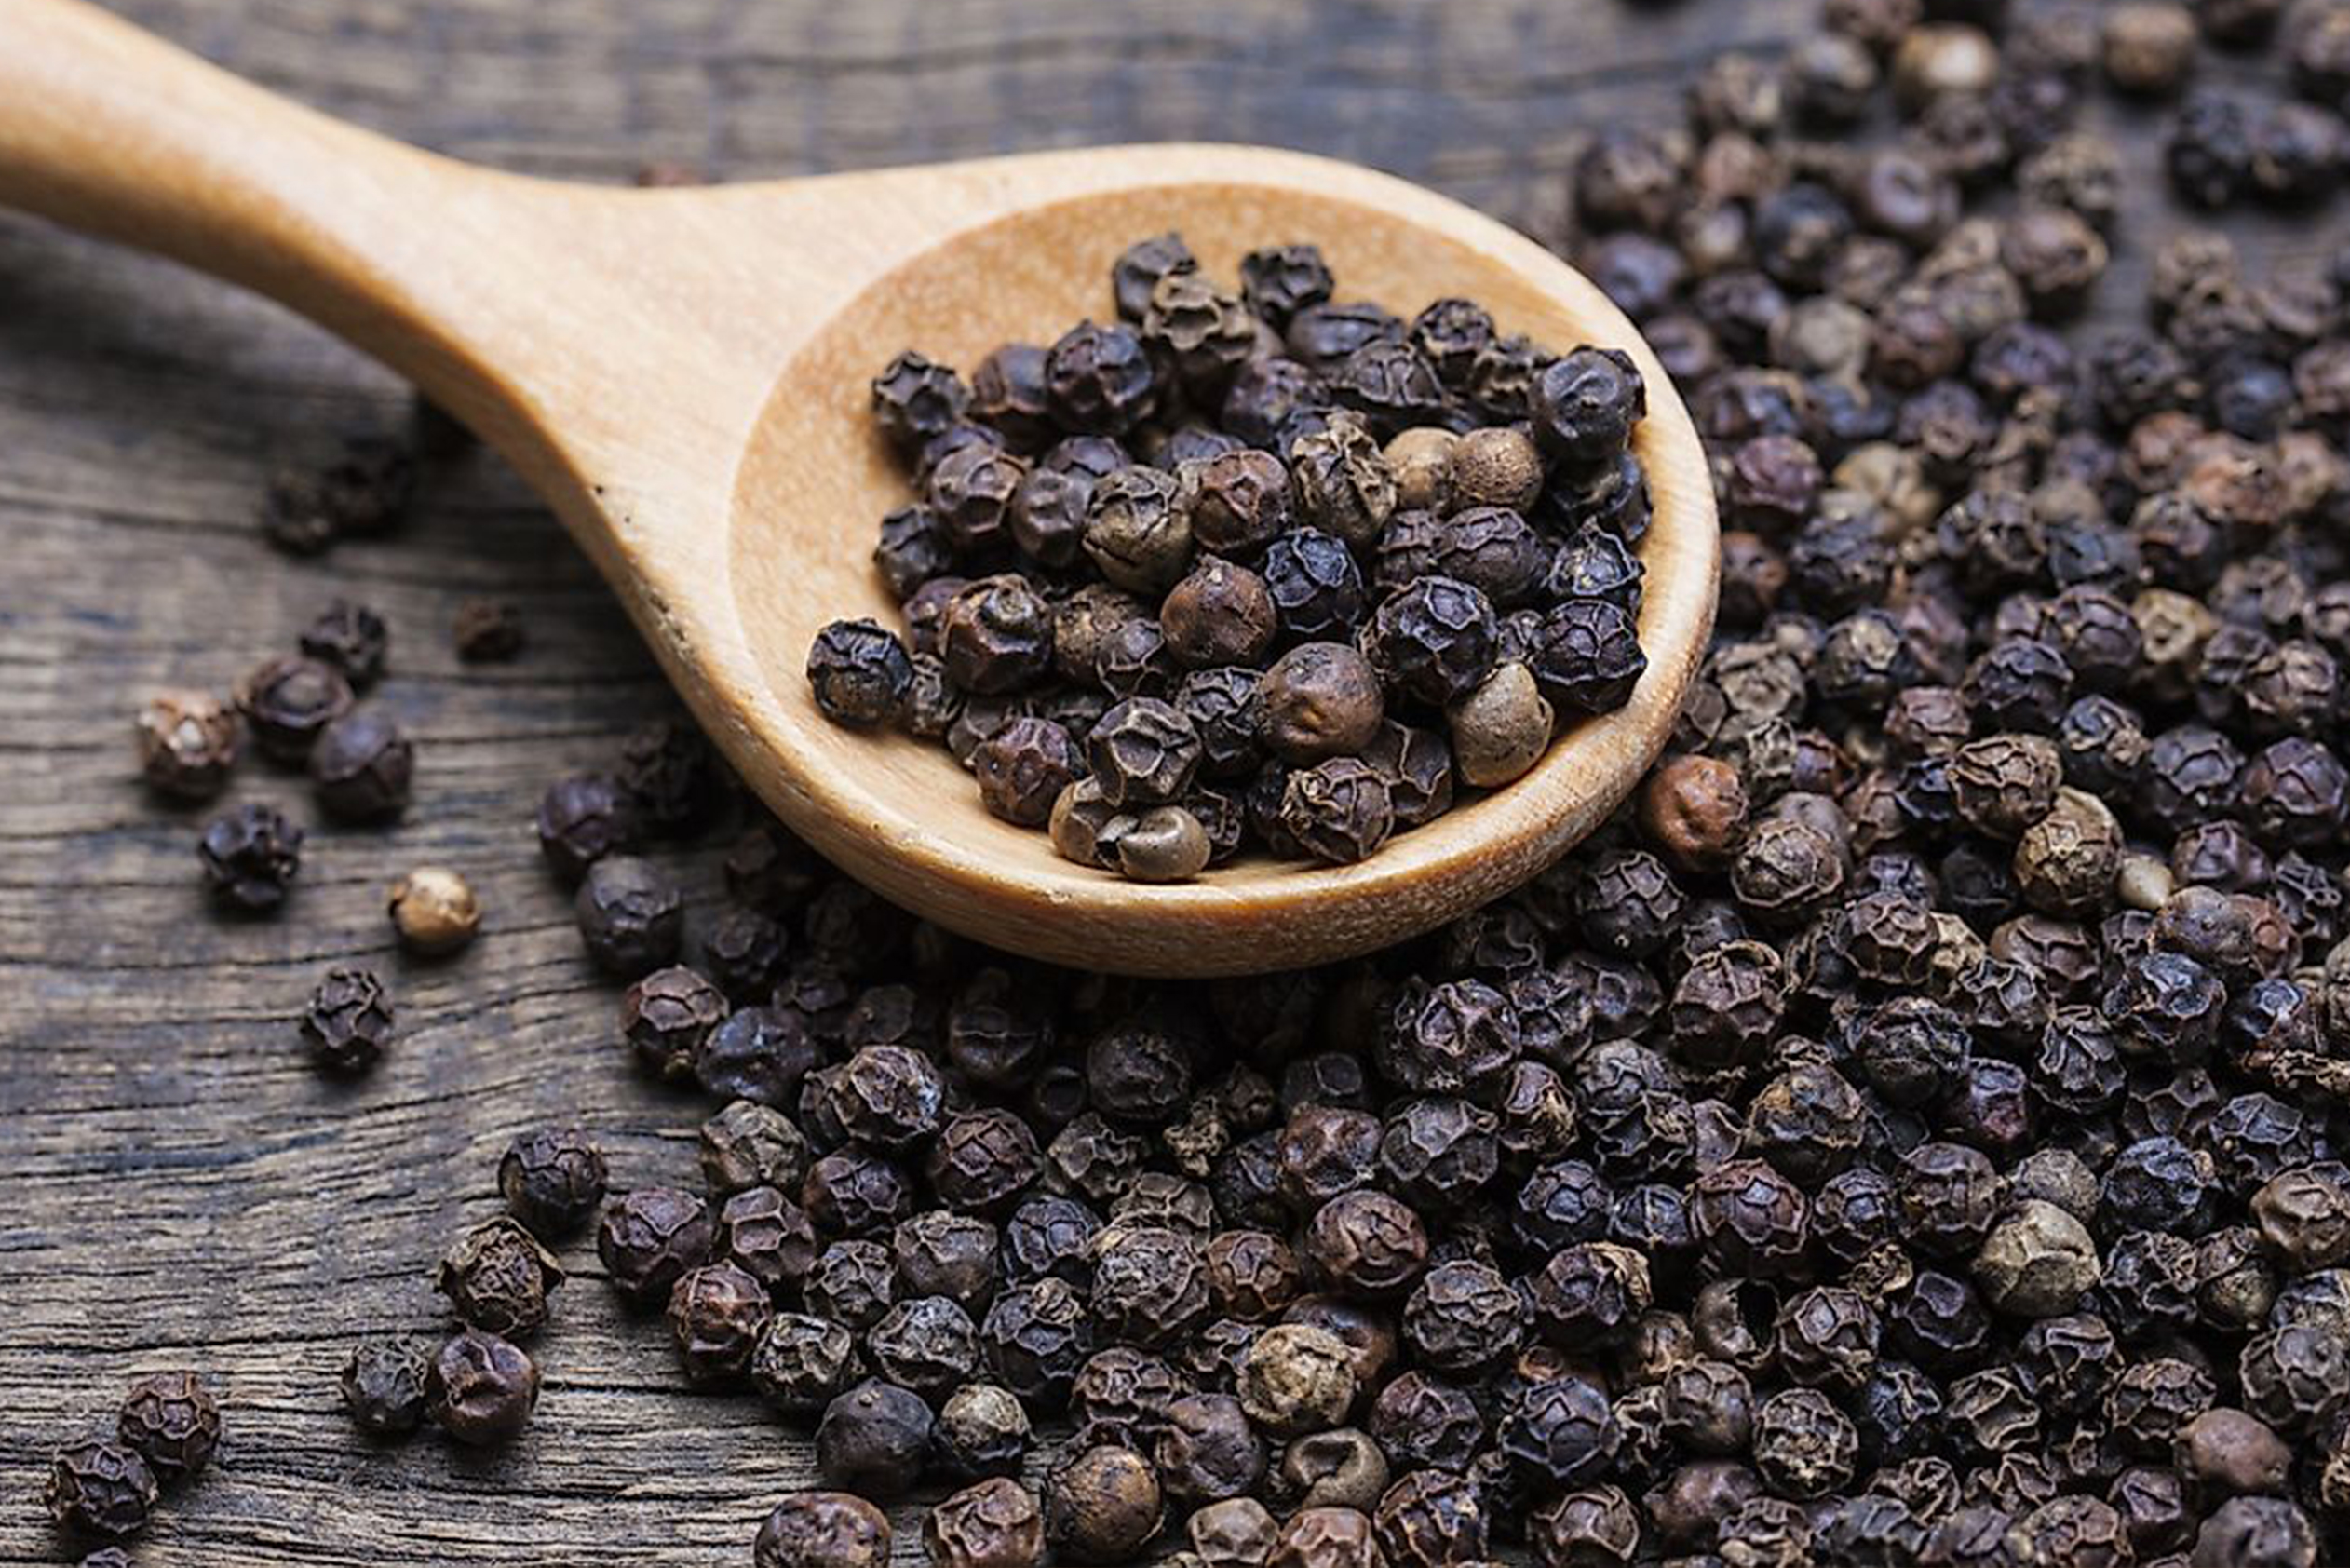 Benefits of Black pepper the everyday seasoning